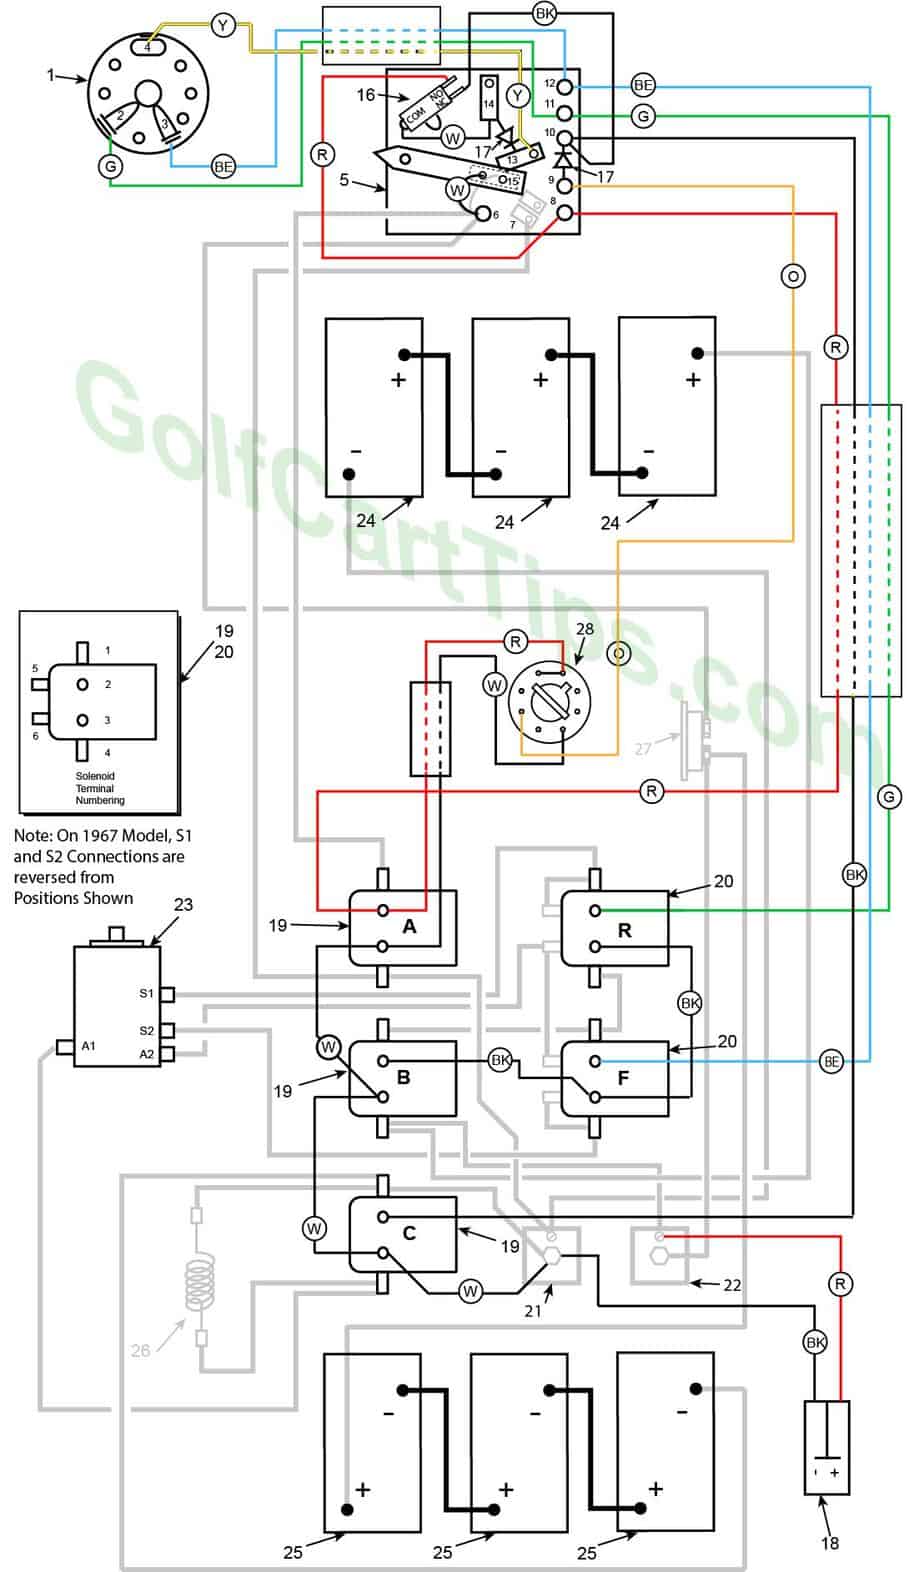 Diagram Harley Golf Cart Wiring Diagram Full Version Hd Quality Wiring Diagram Seemdiagram Eracleaturismo It